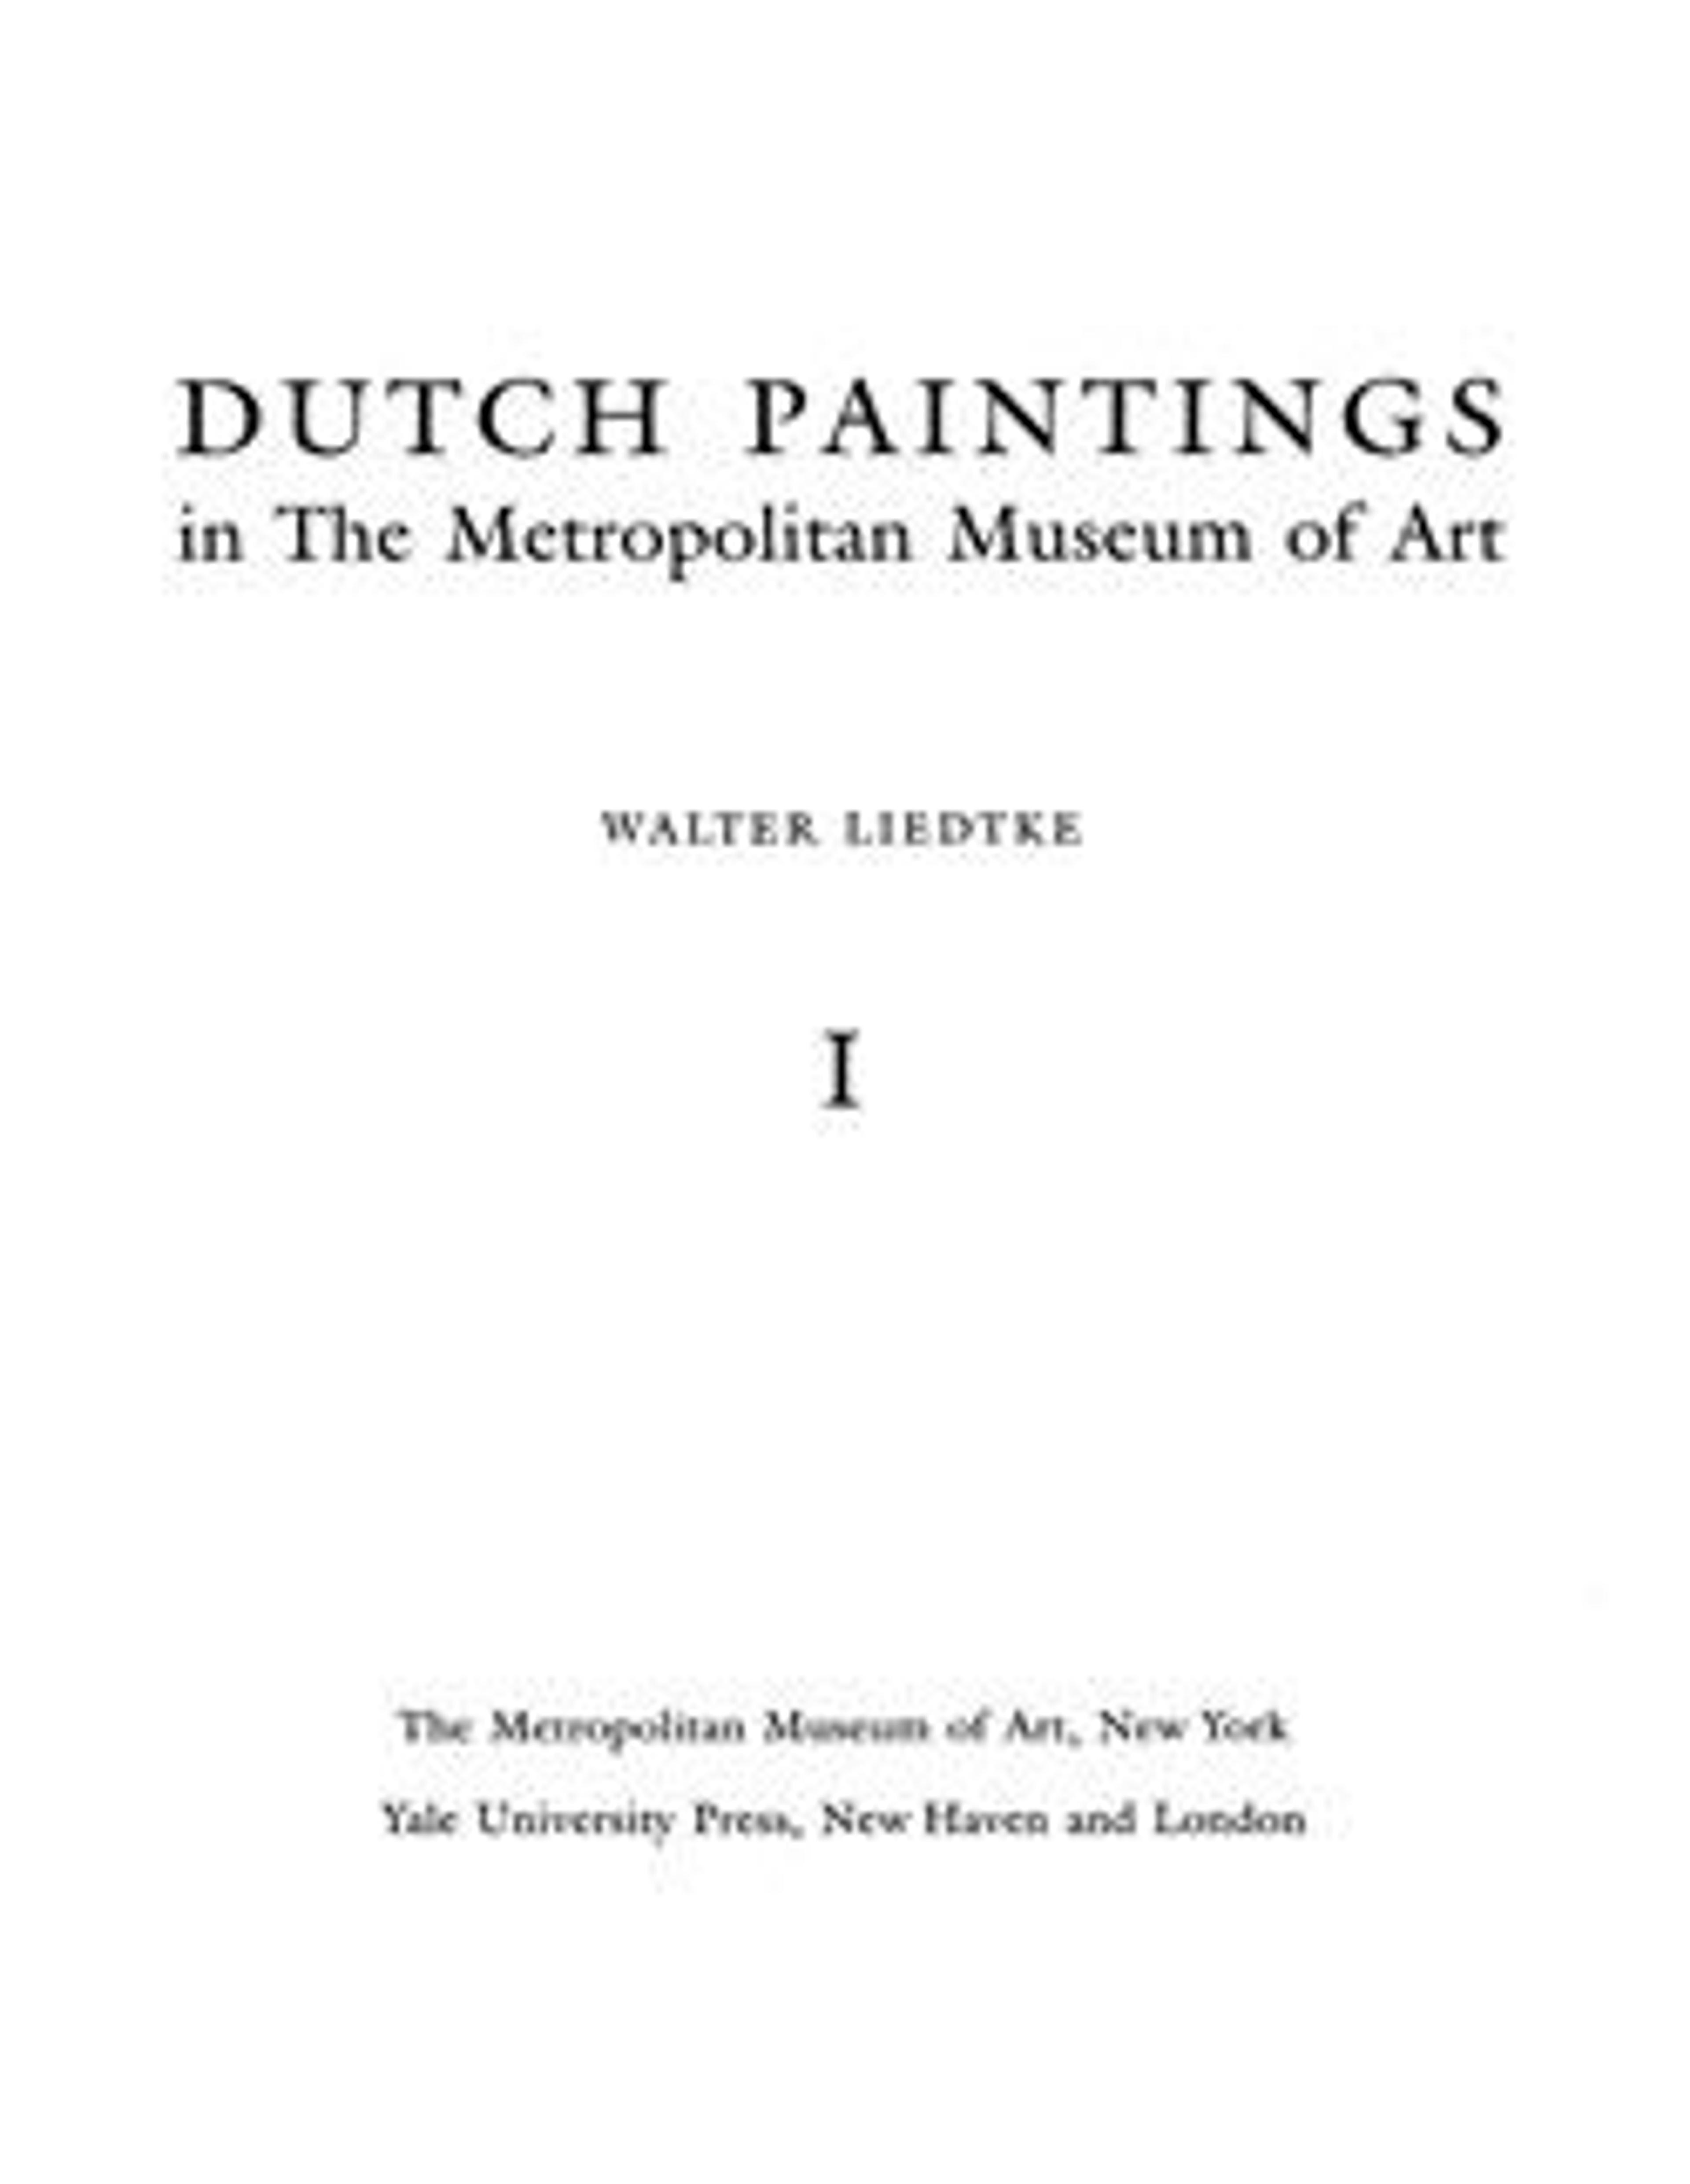 Dutch Paintings in The Metropolitan Museum of Art. 2 vols.